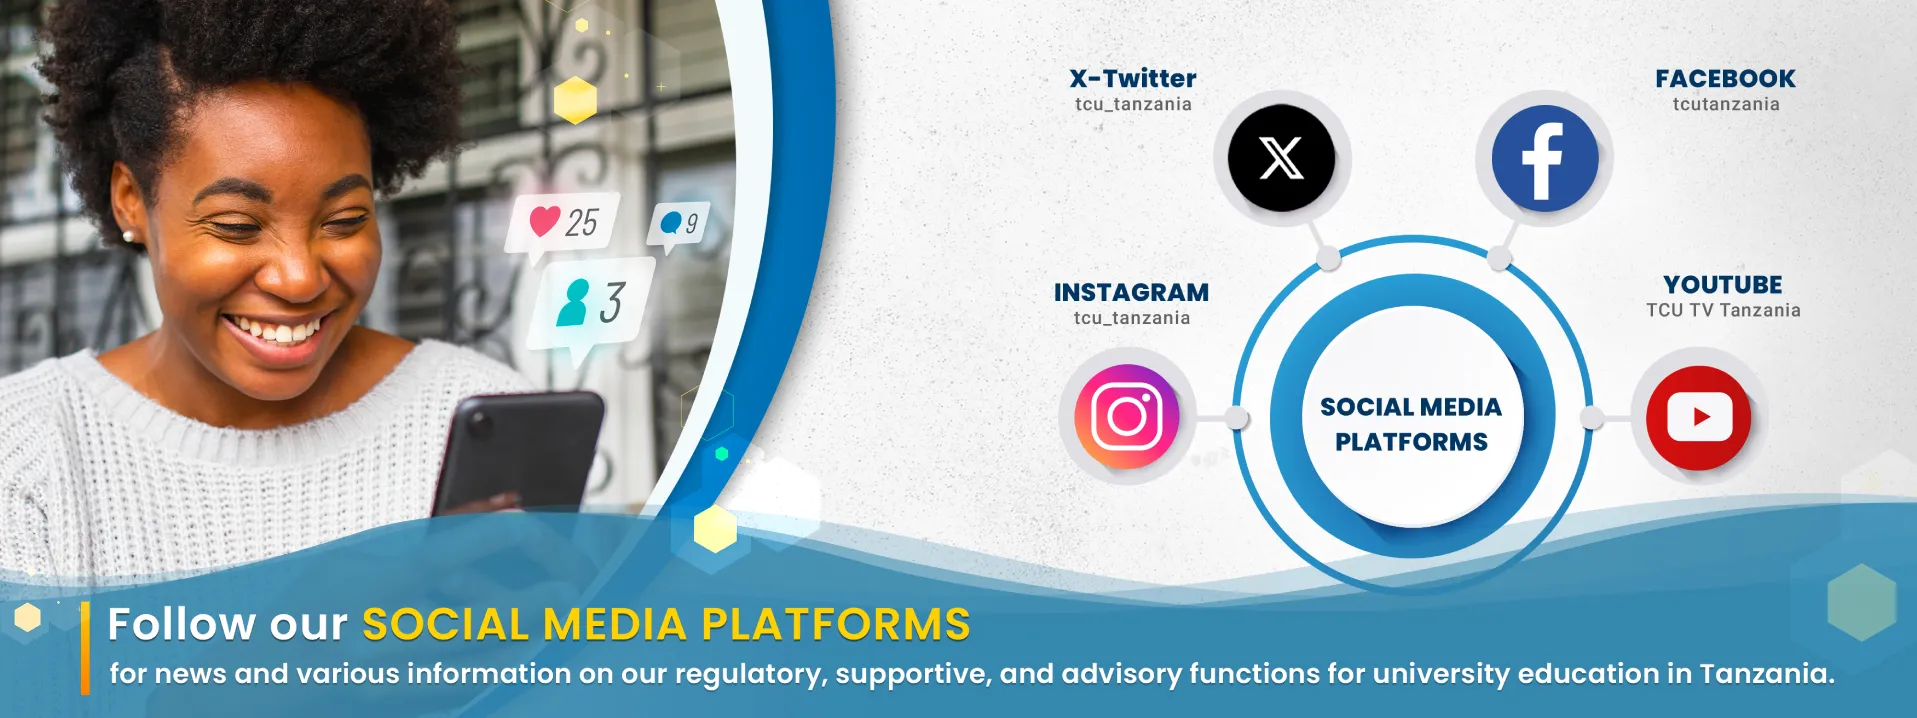 Follow our Social Media Platforms